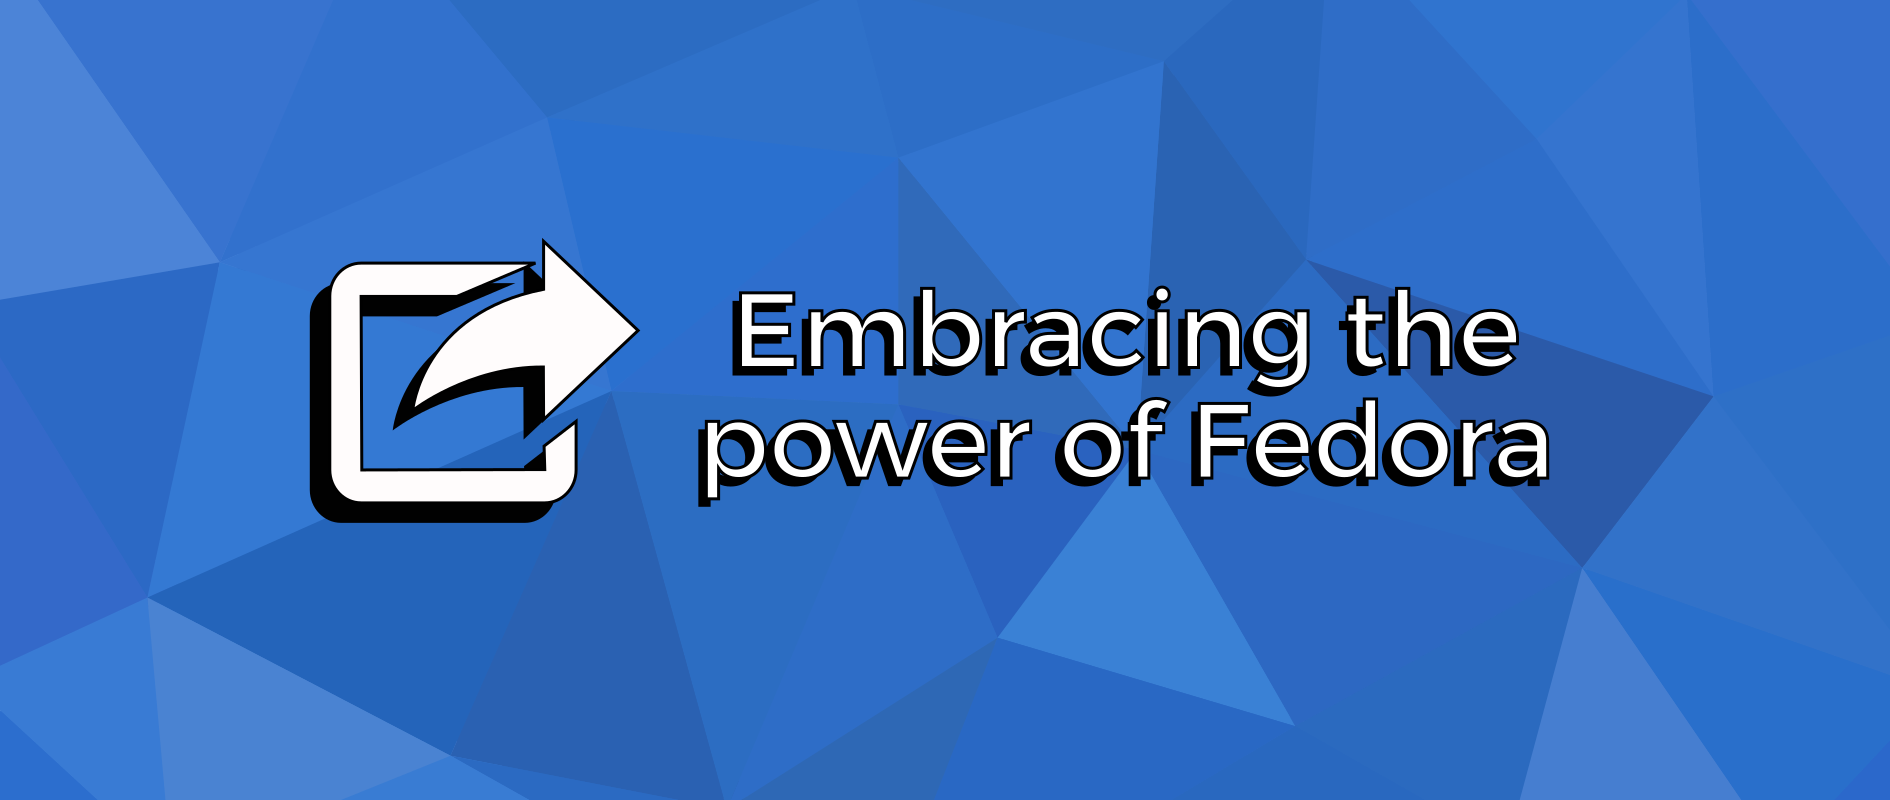 Happily embracing power of Fedora